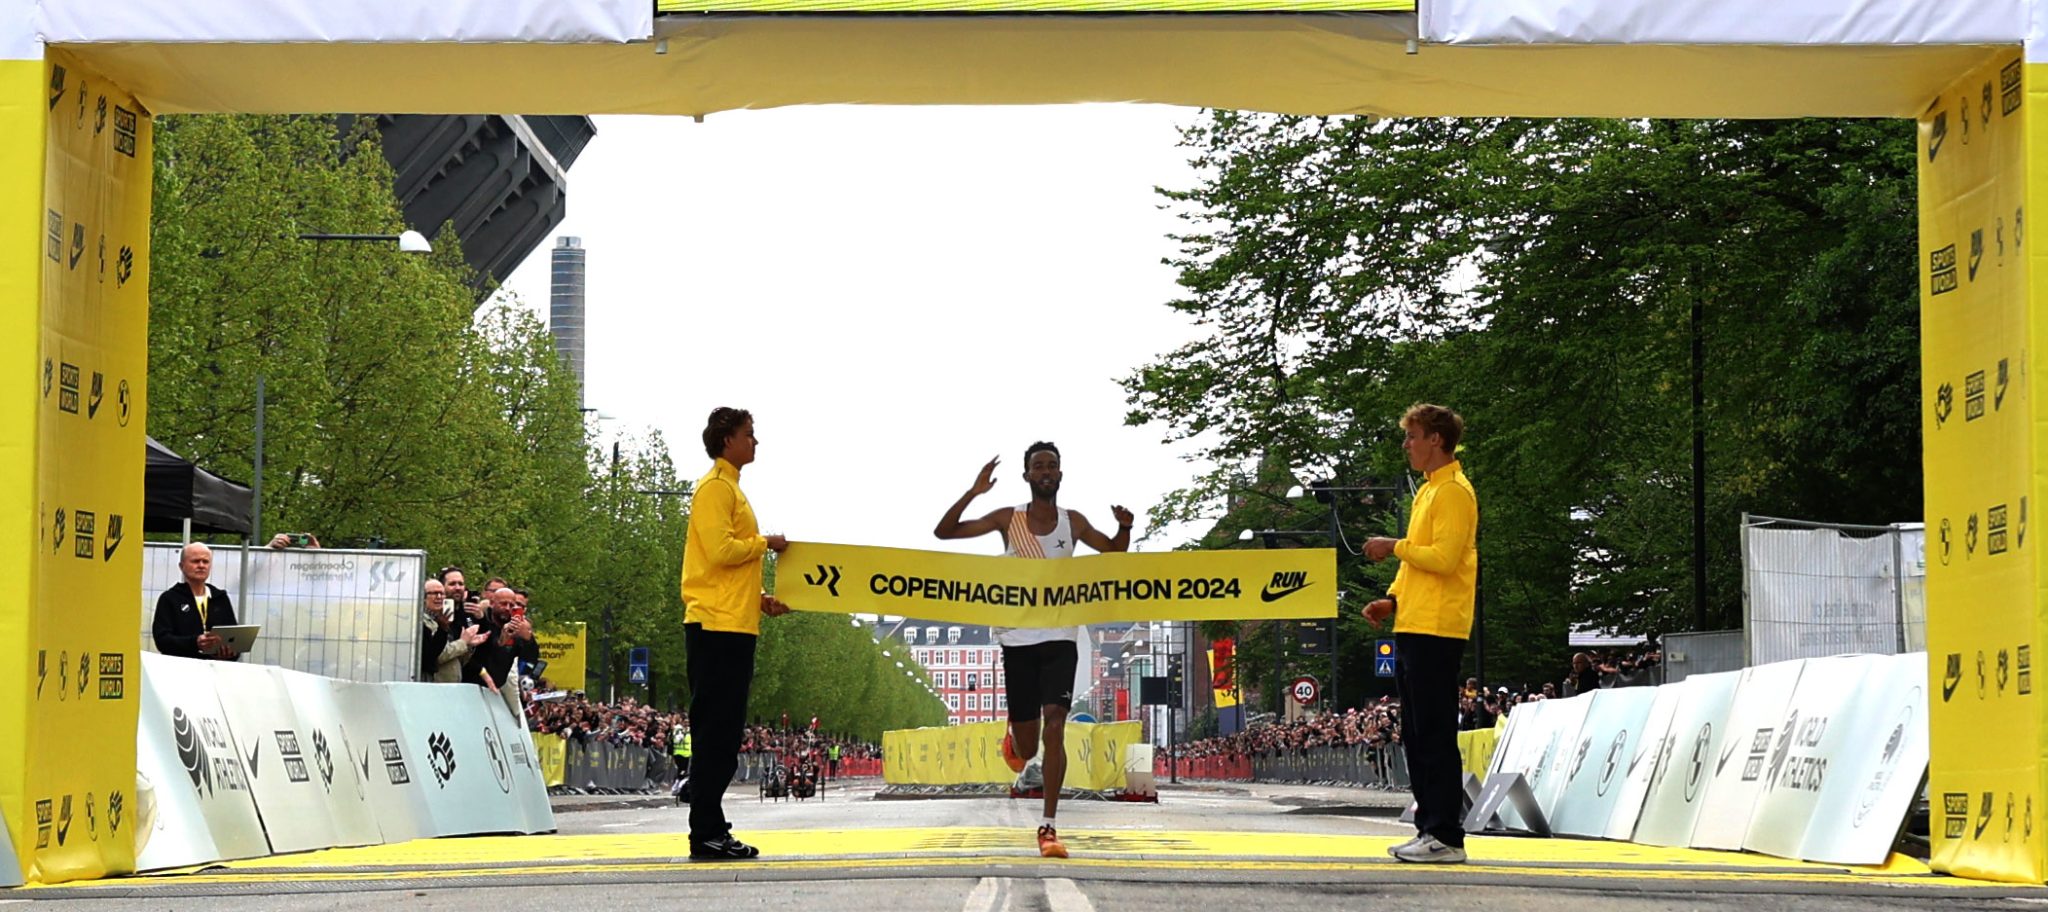 Fokusløb: Copenhagen Marathon 2025